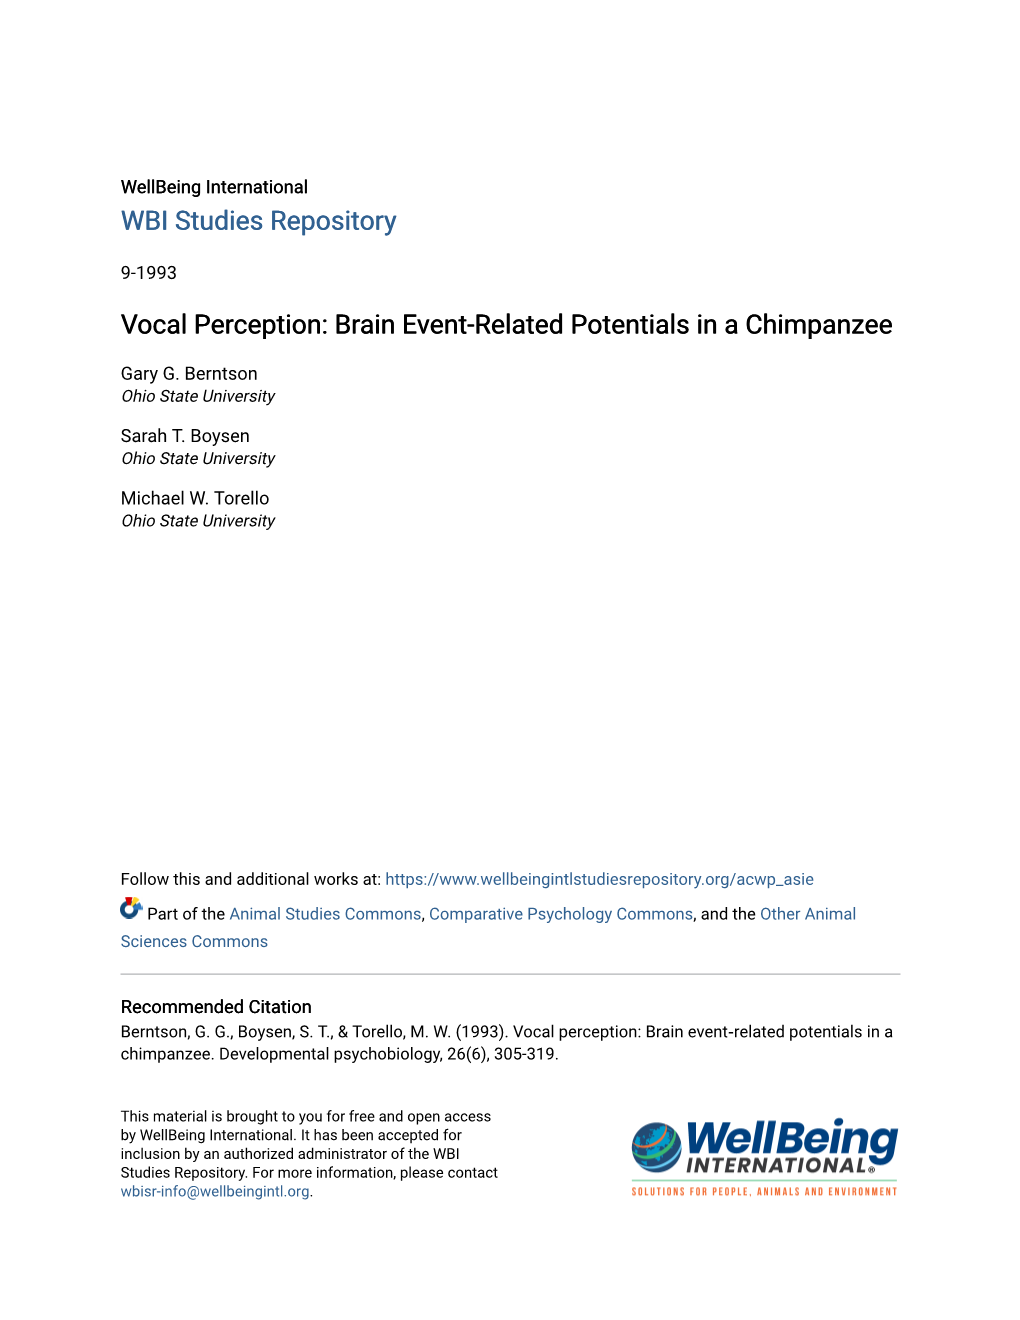 Vocal Perception: Brain Event-Related Potentials in a Chimpanzee